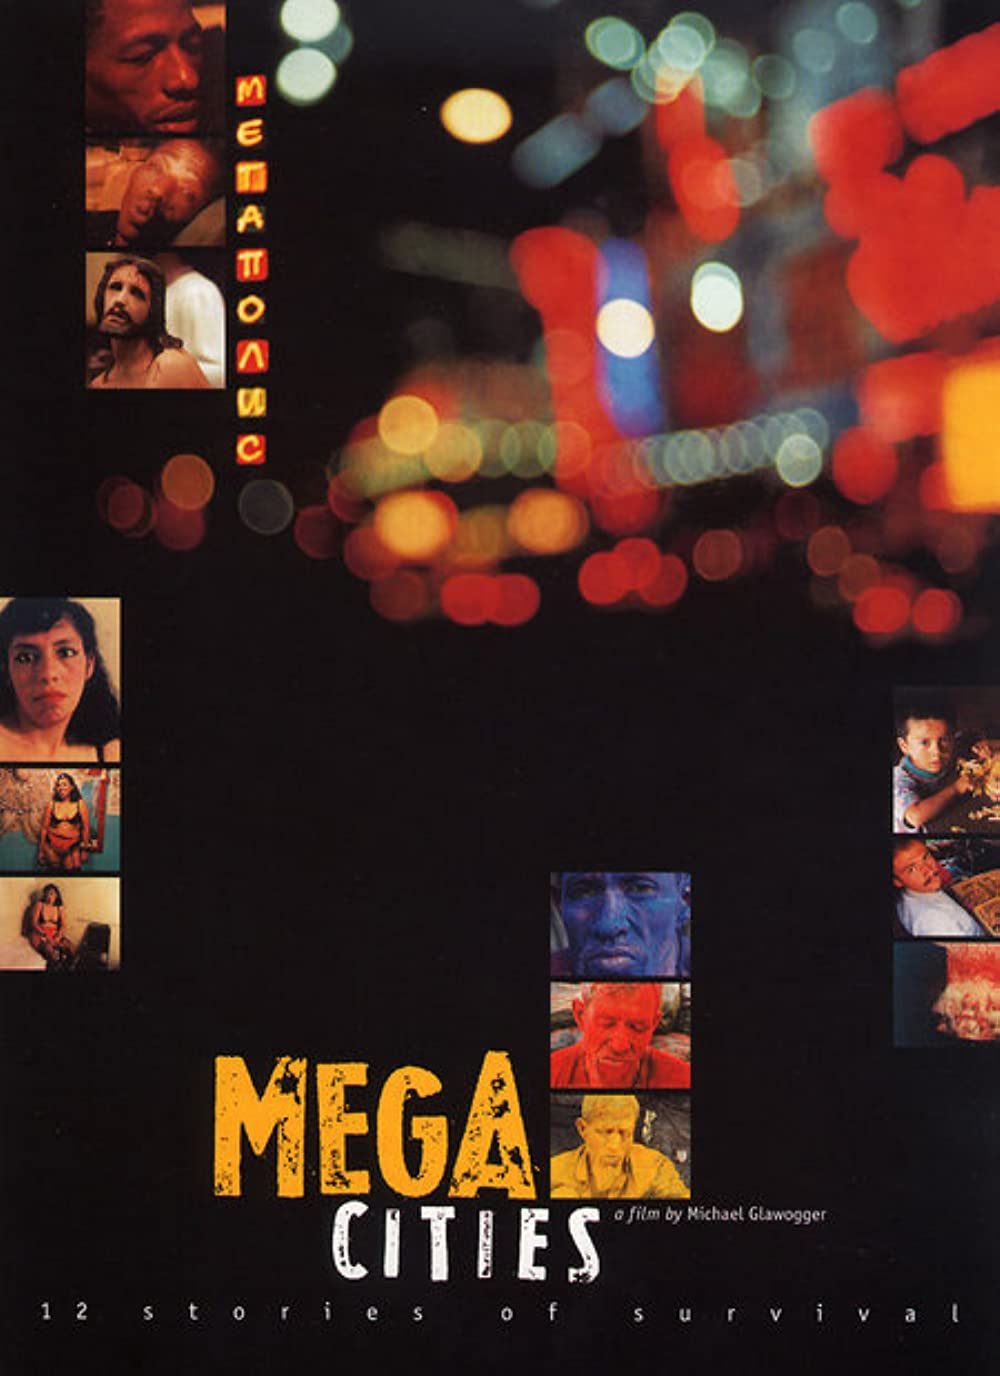 Filmbeschreibung zu Megacities (OV)